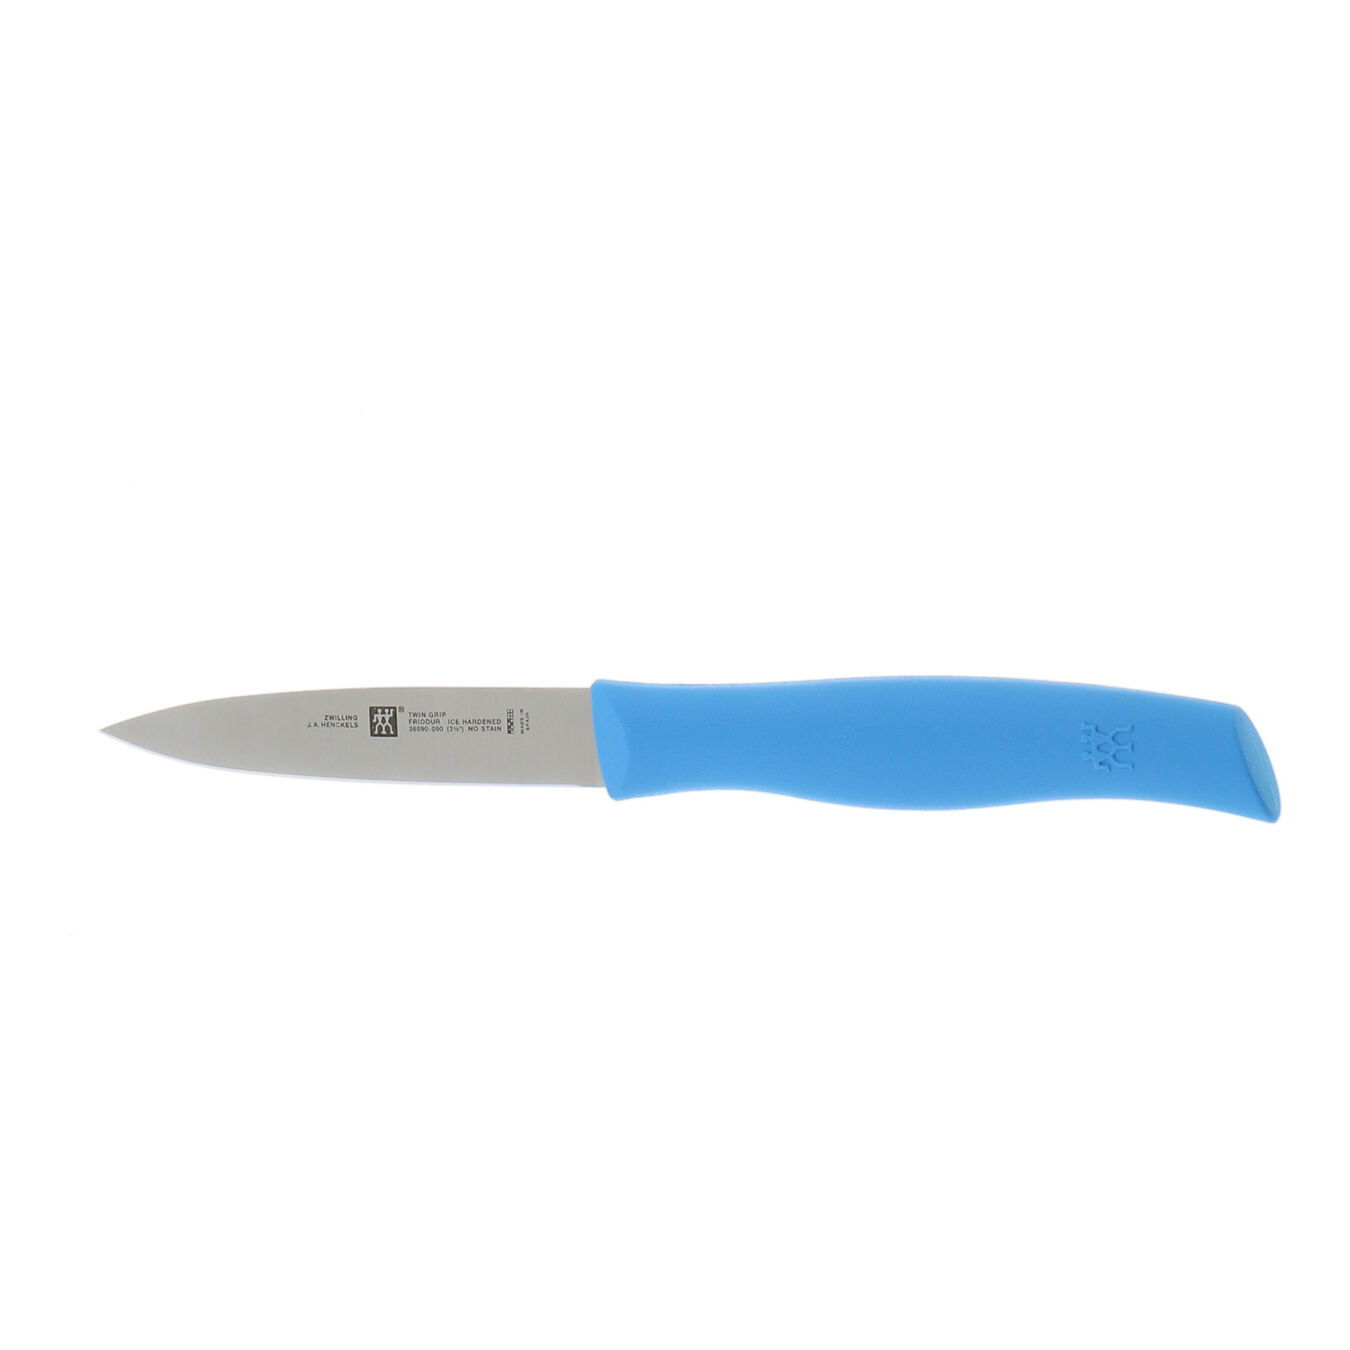 3.5-inch, Paring Knife Blue,,large 1